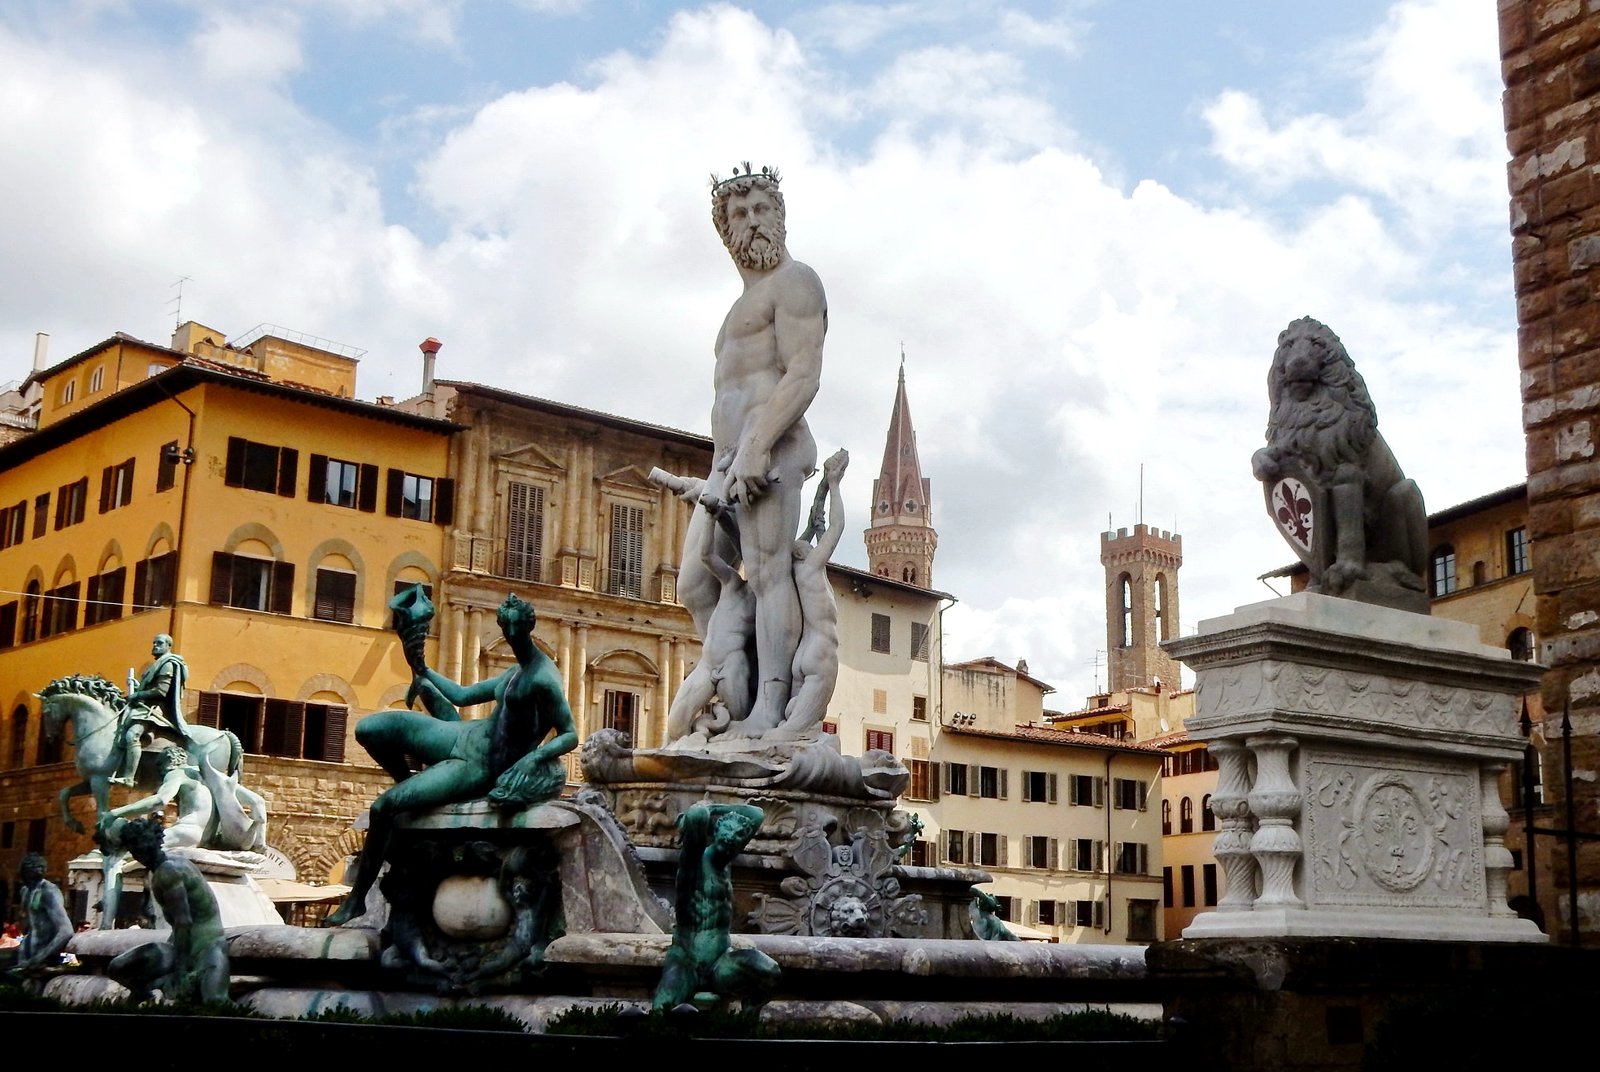 How to admire the sculpture on Piazza della Signoria in Florence